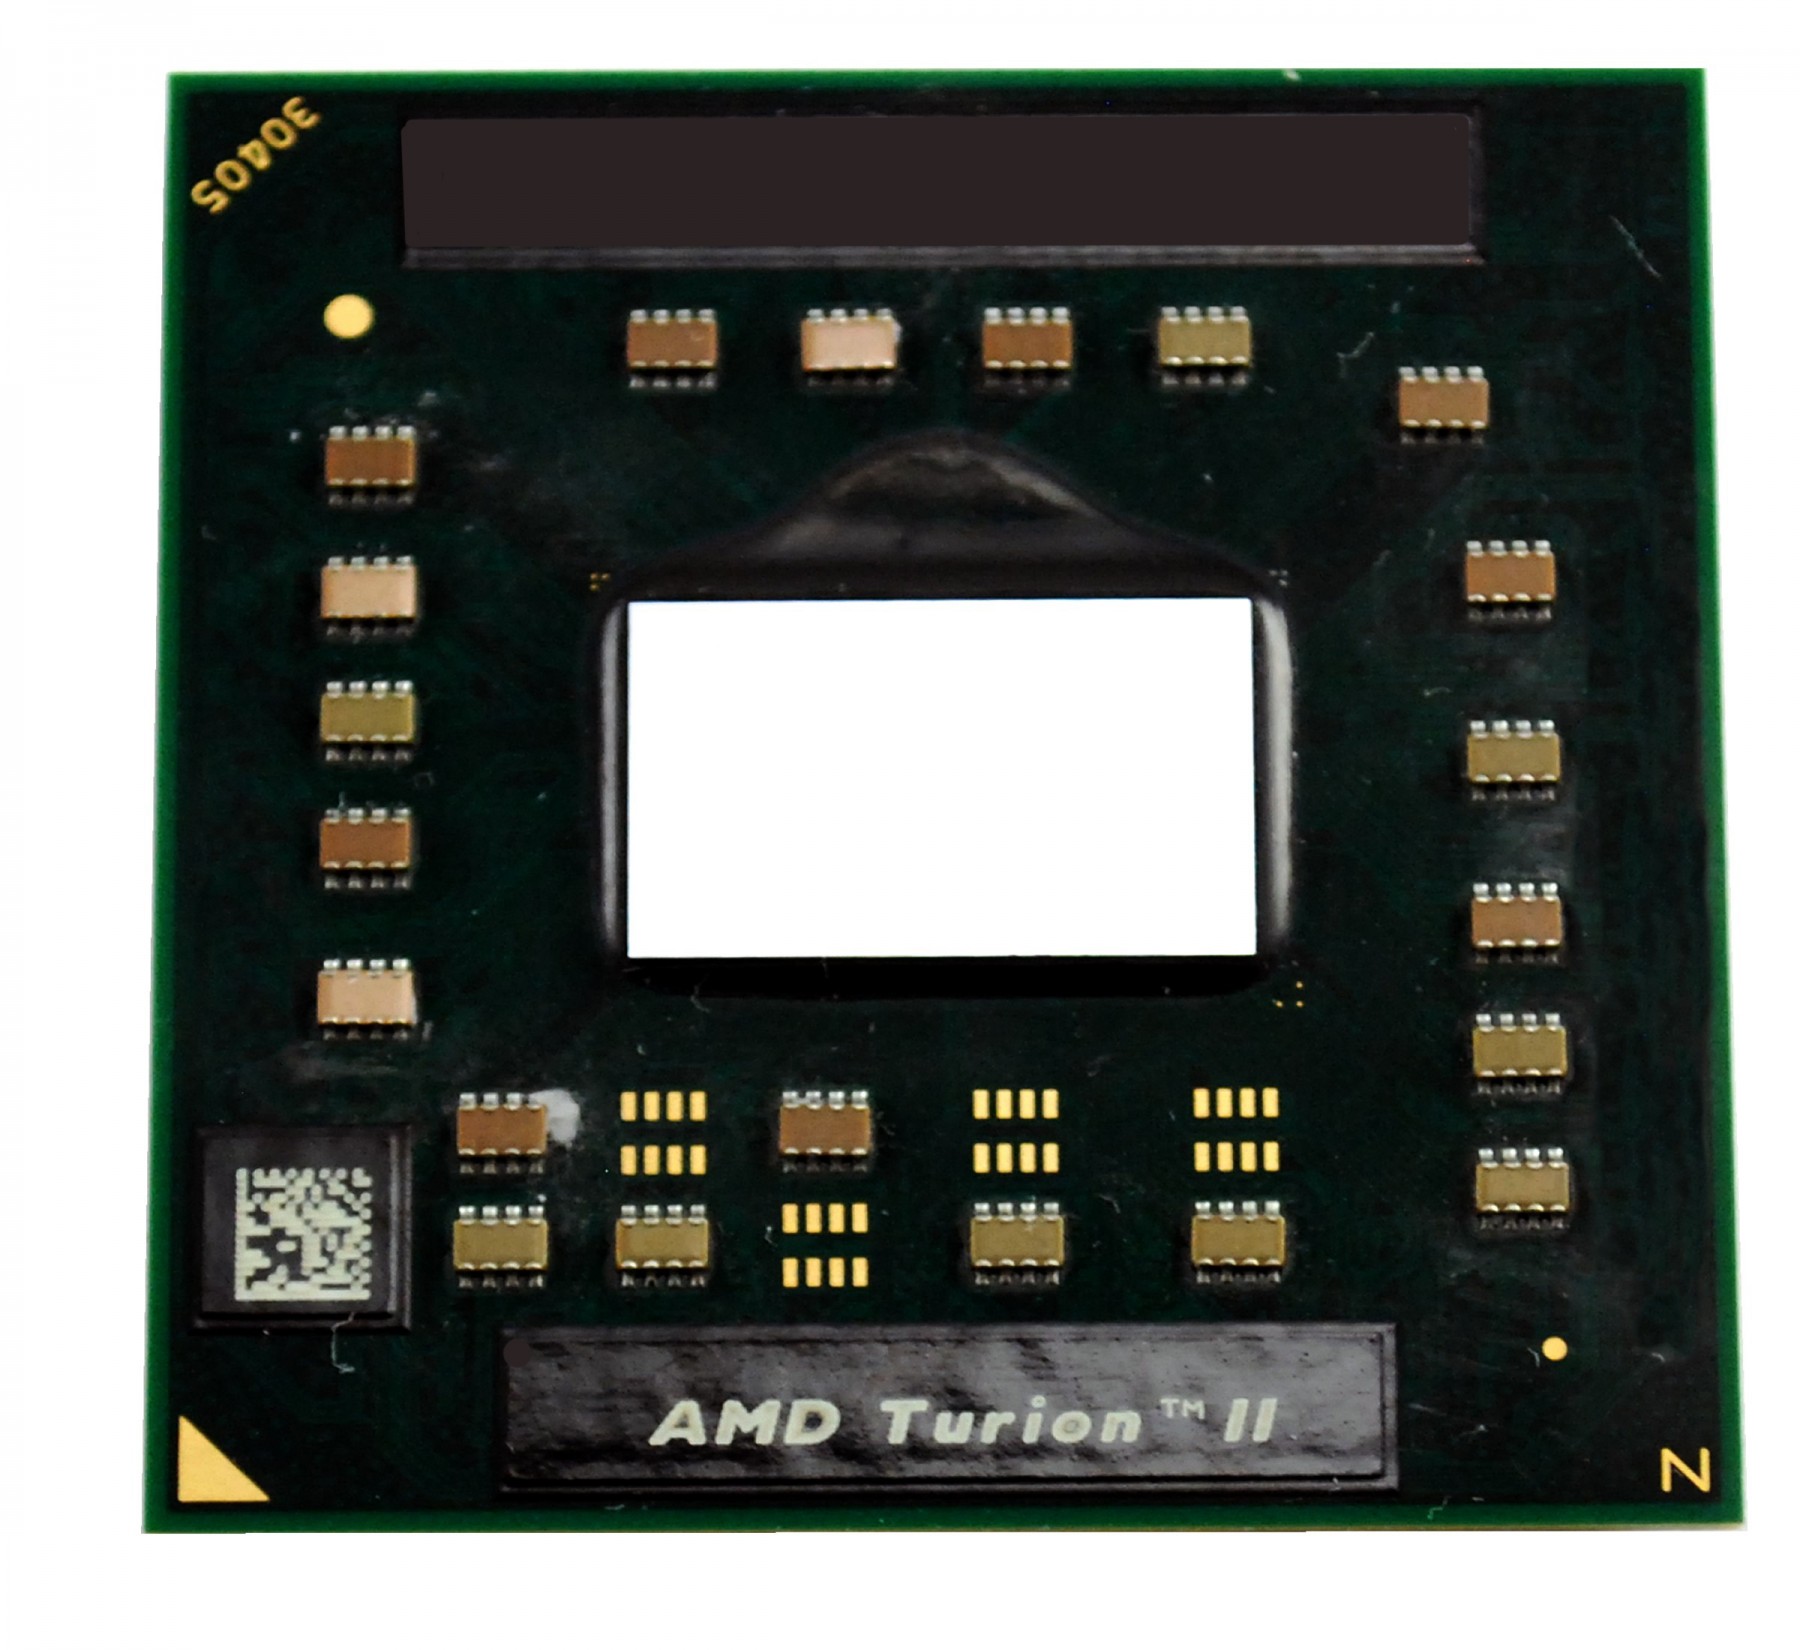 50003176527-AMD Turion II Dual-Core TMM500DB022GQ 2.2Ghz Socket S1 Mobile Processor-image